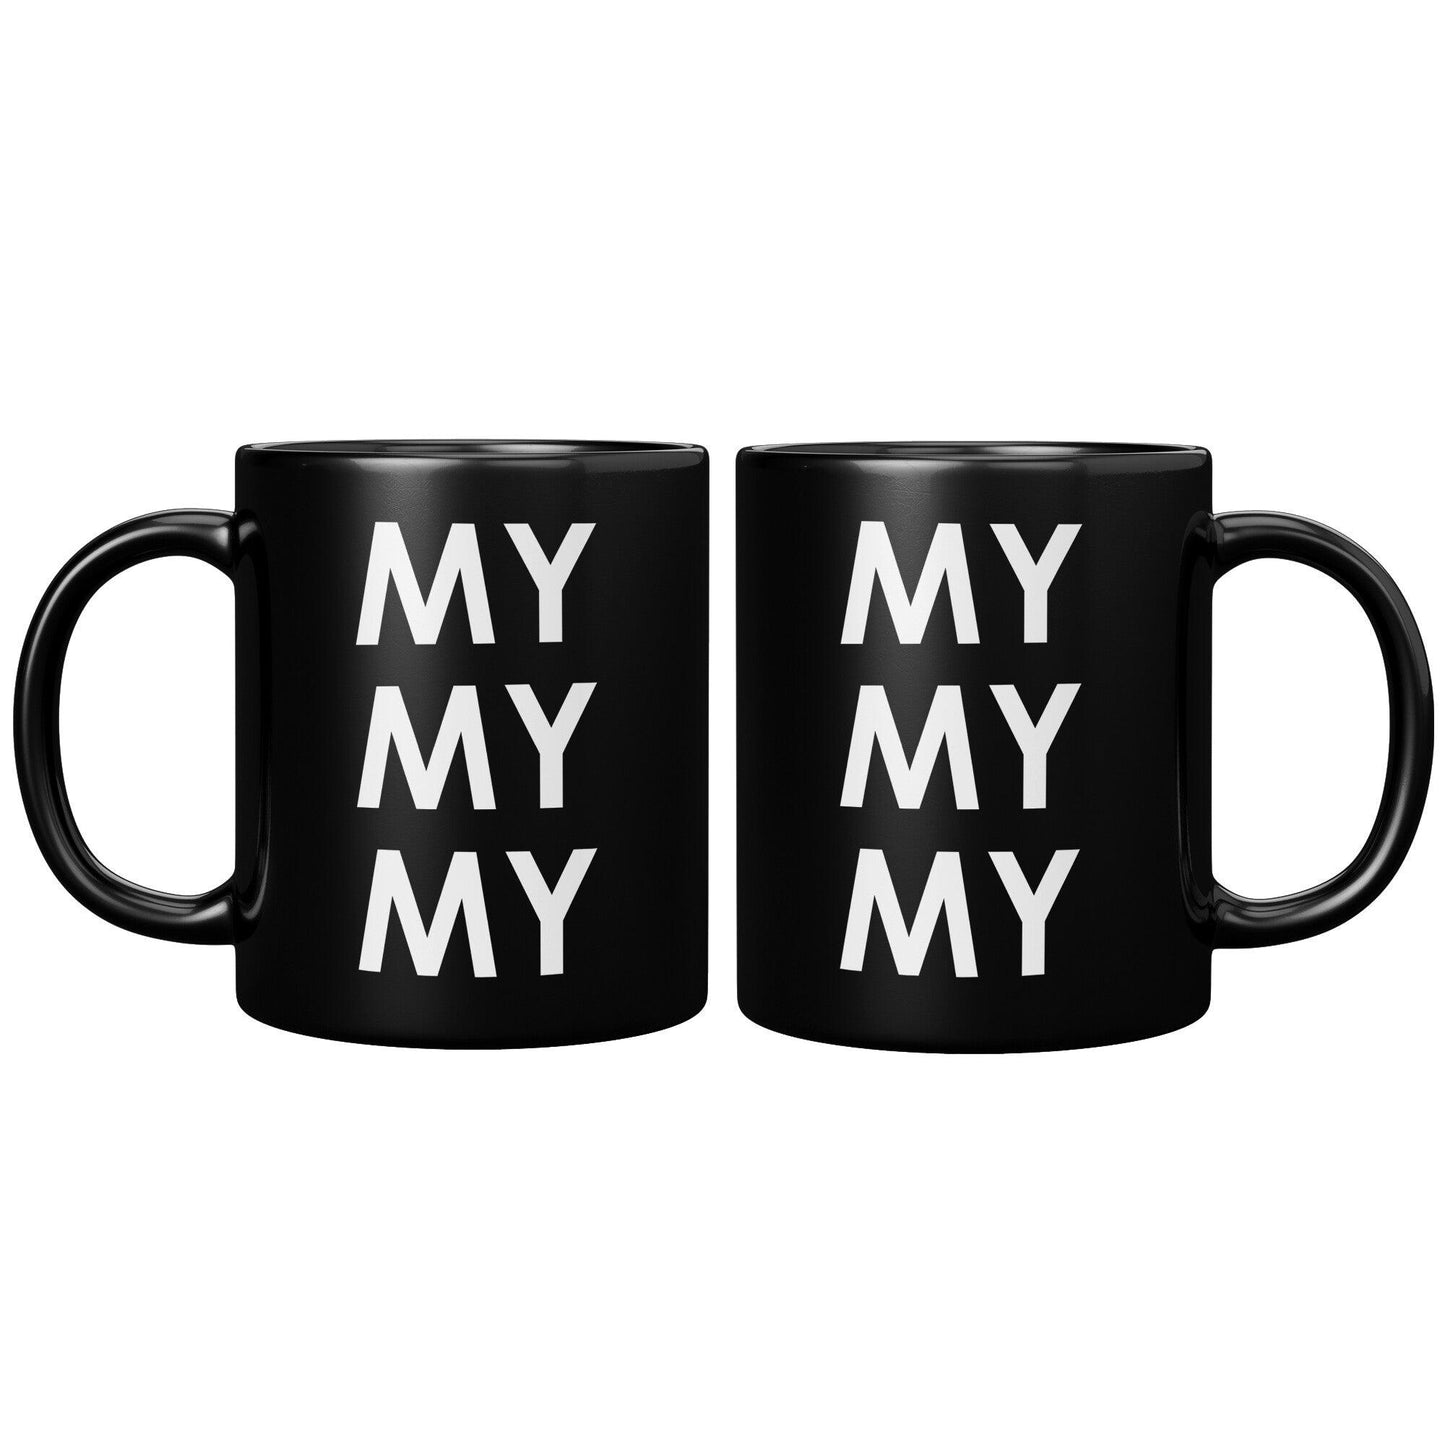 My My My Black Mug - TheGivenGet